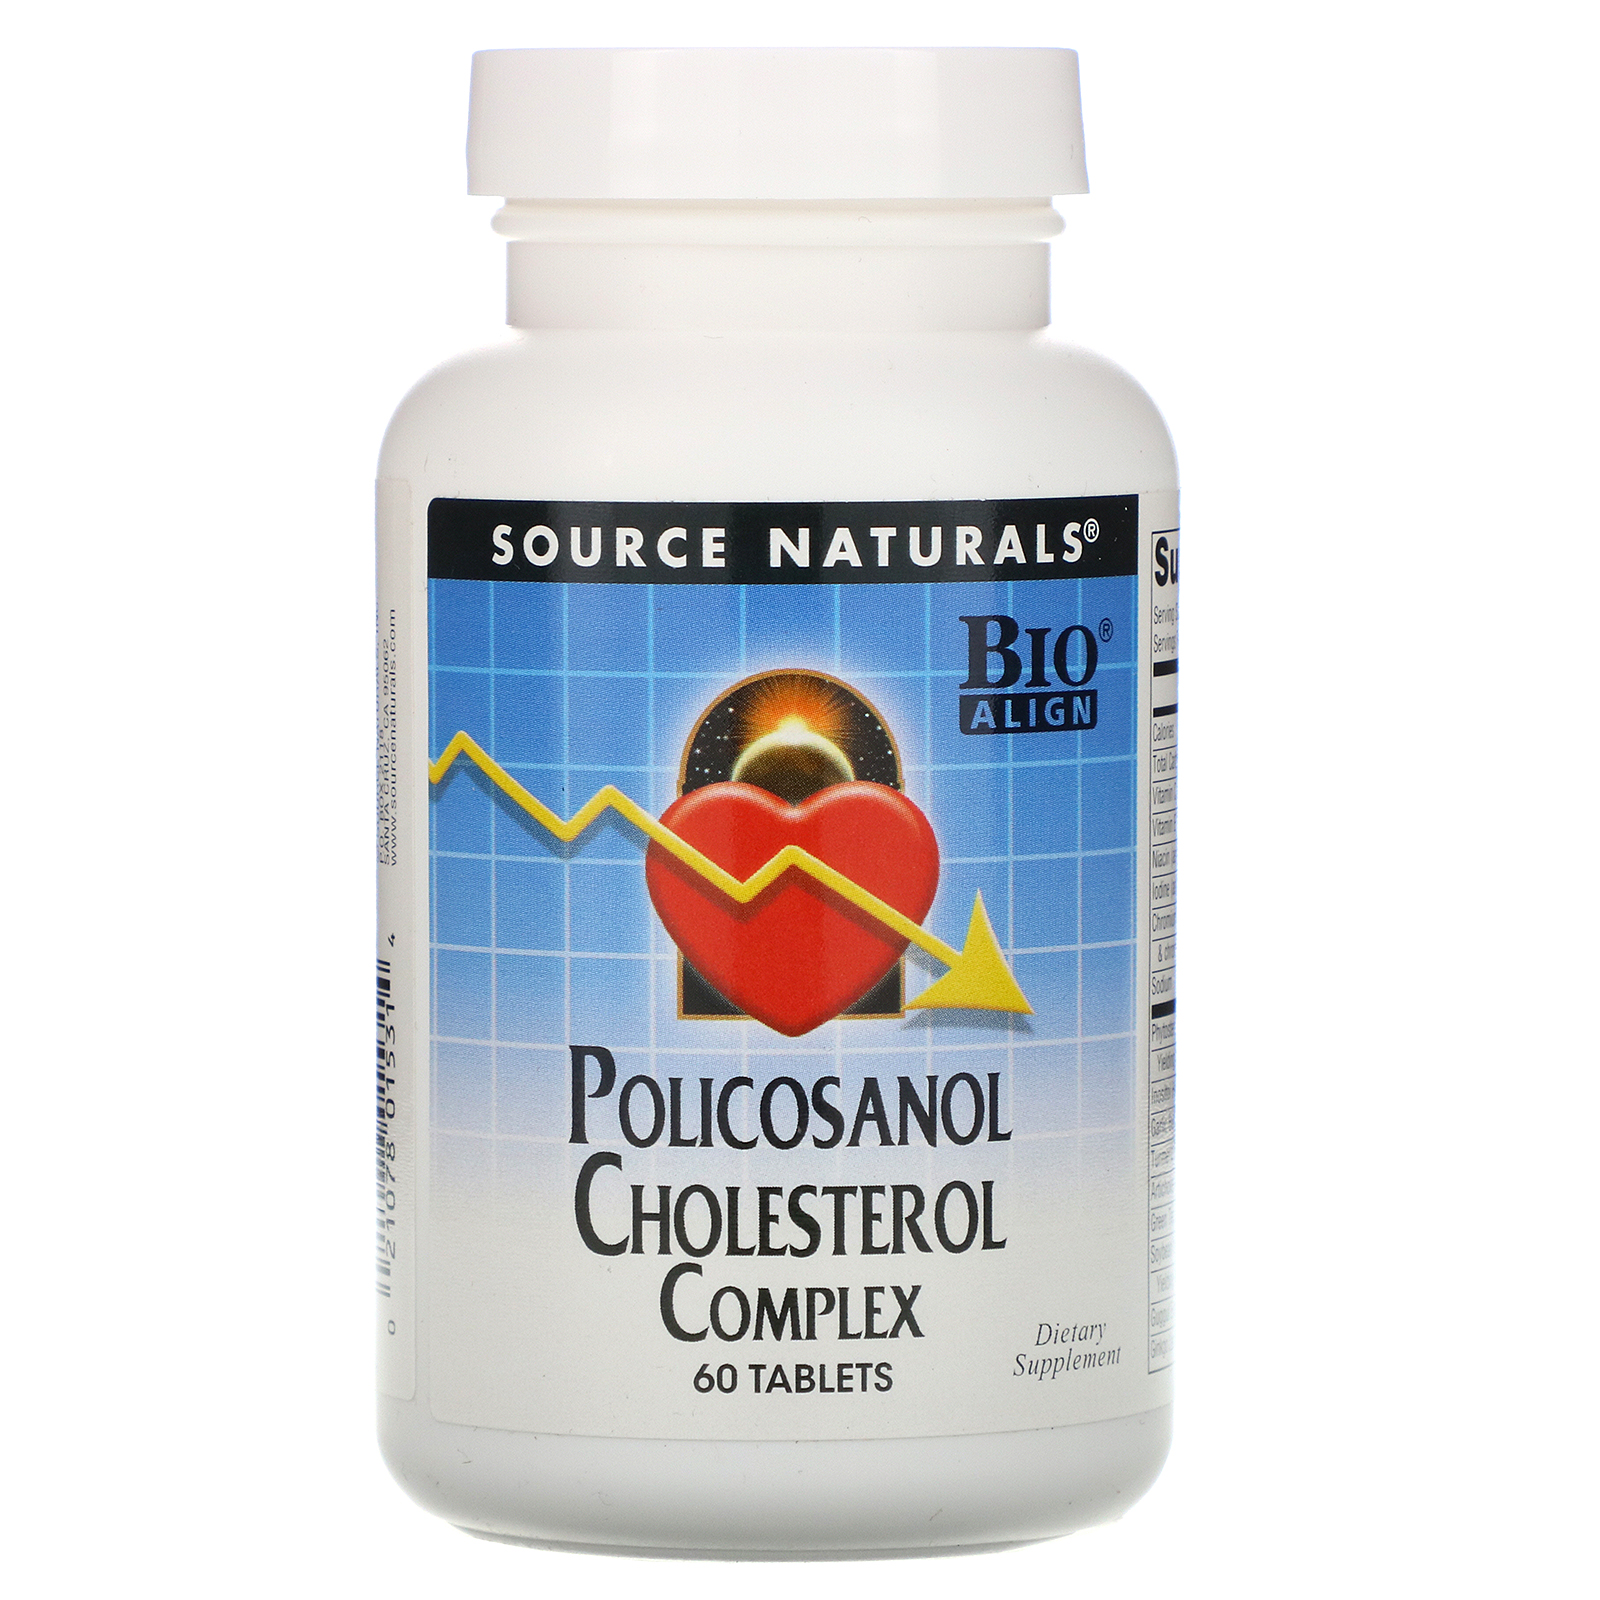 Холестерол таблетки. Противохолестериновая таблетка. Поликосанол. Policonsancil cholesterol Complex. Policosanol cholesterol Complex состав.